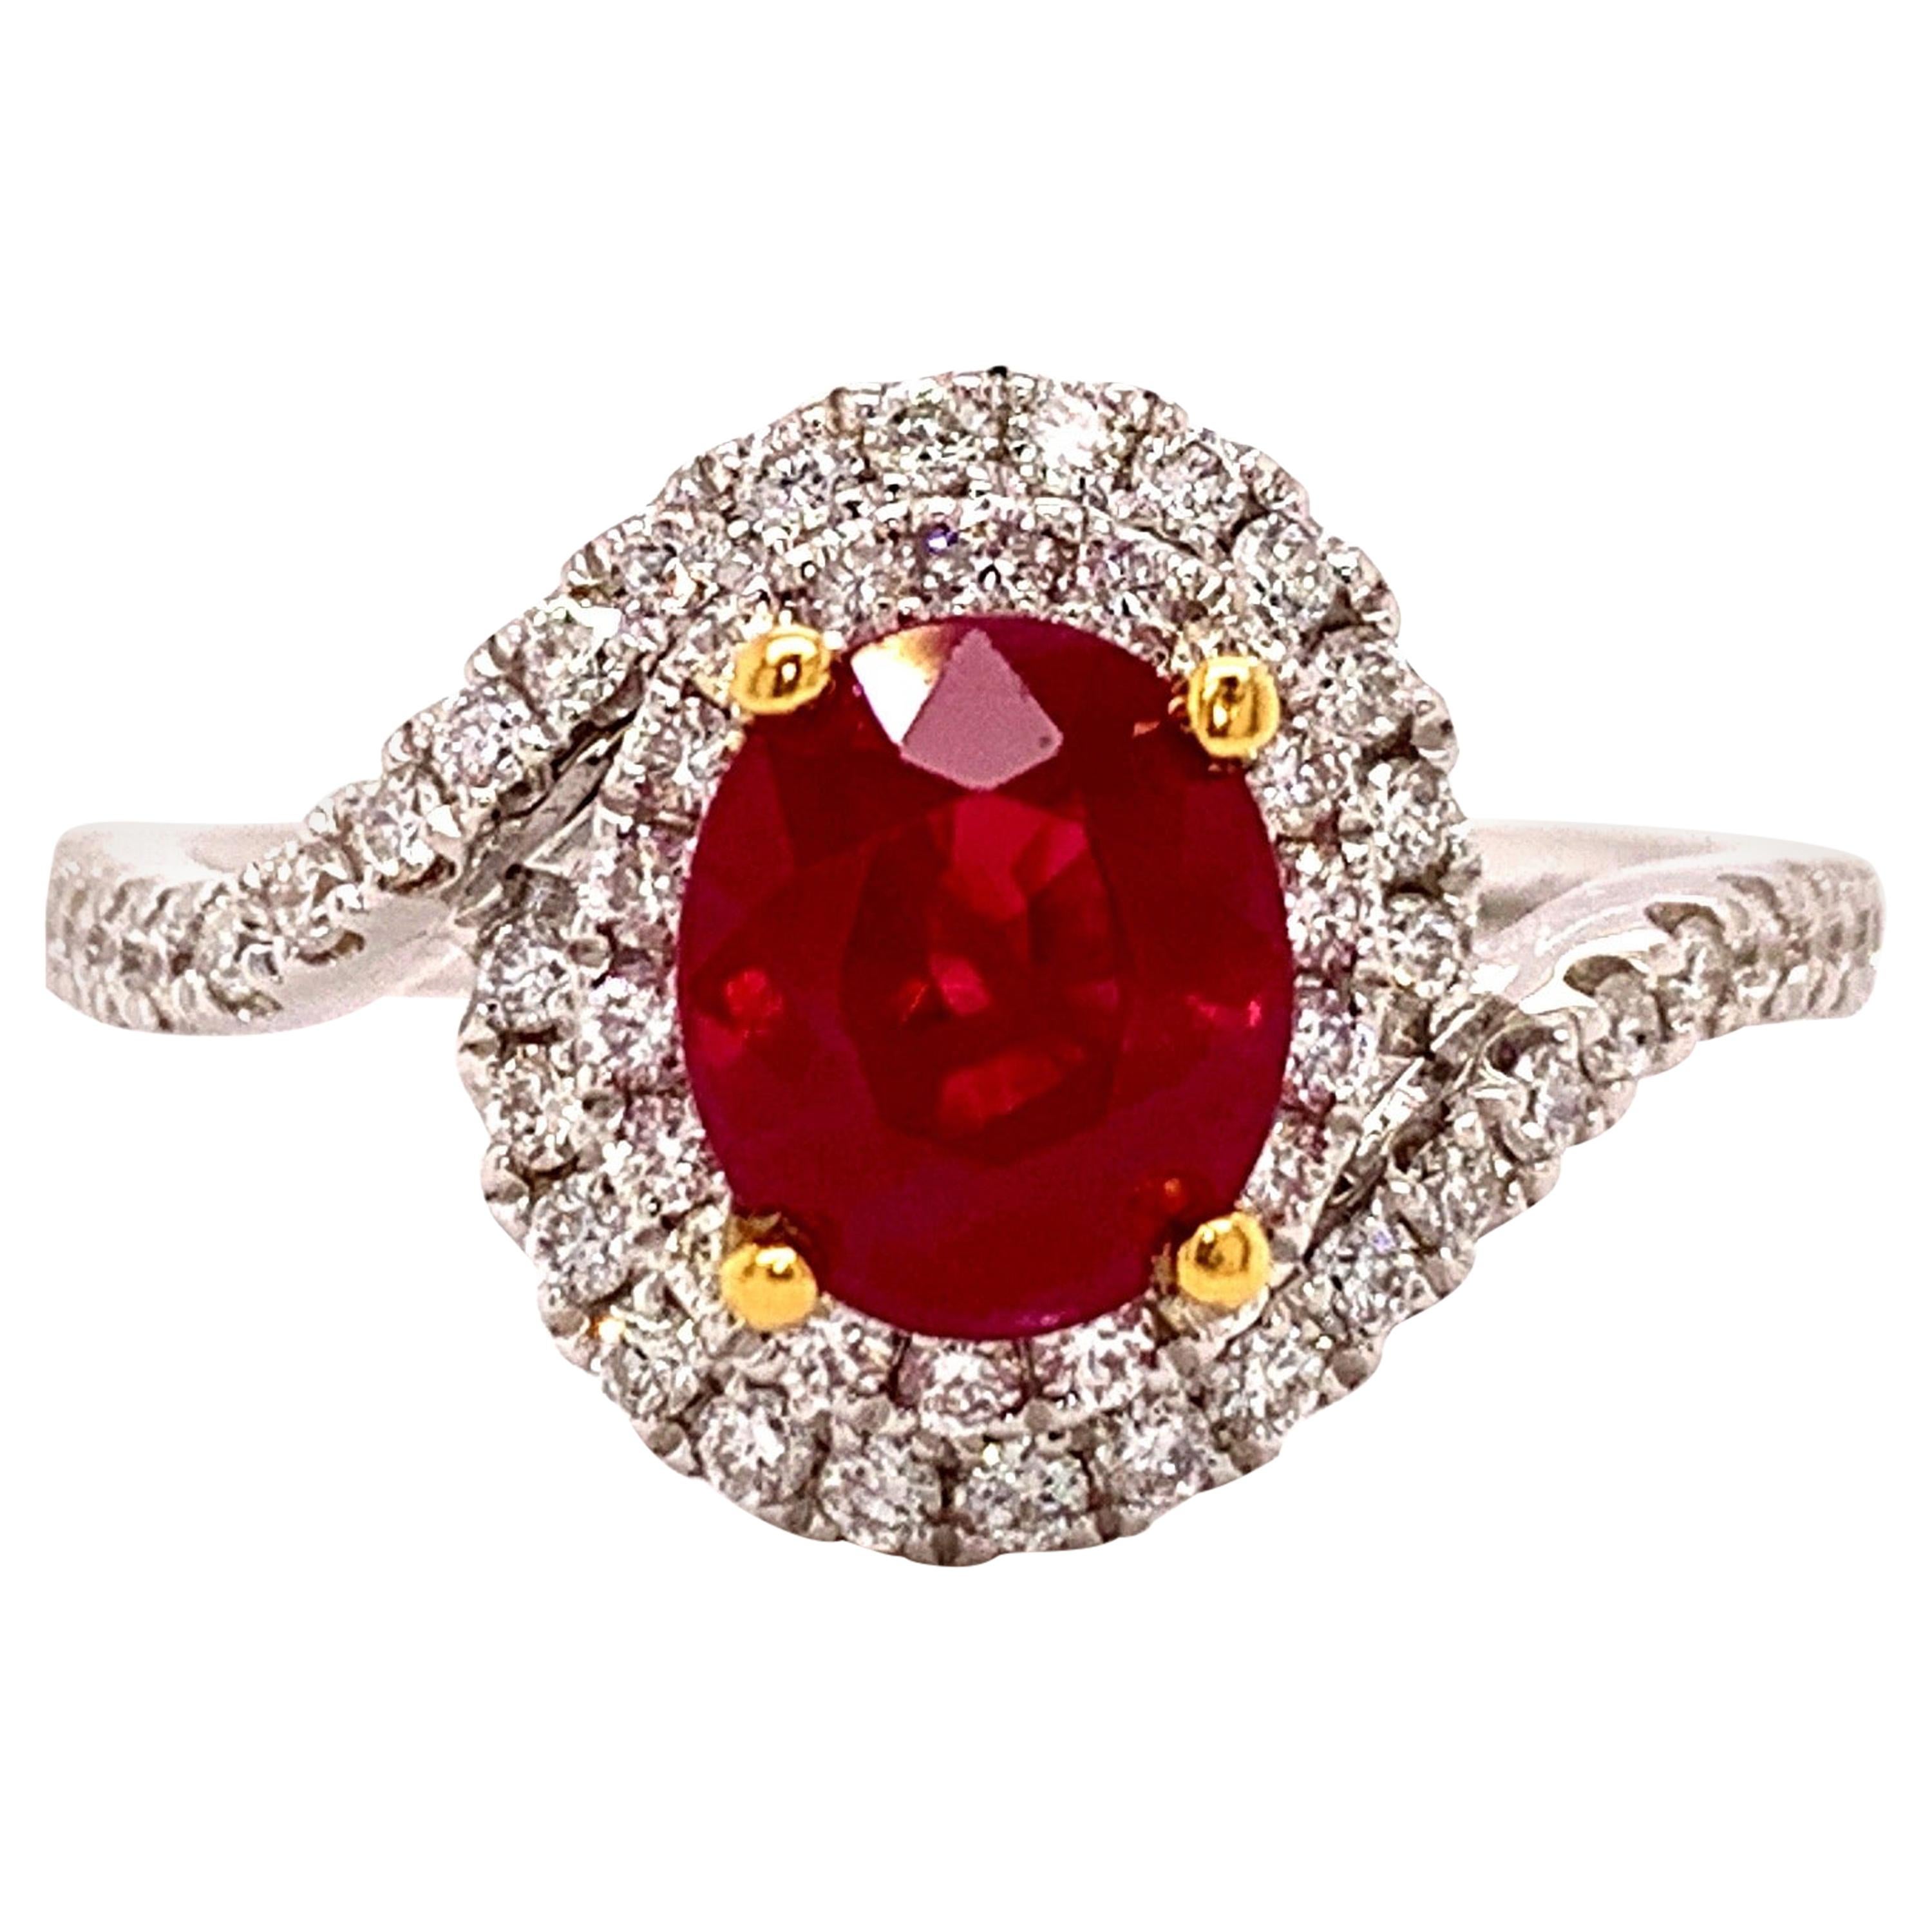 Burma 1.59 Carat Ruby Diamond Ring